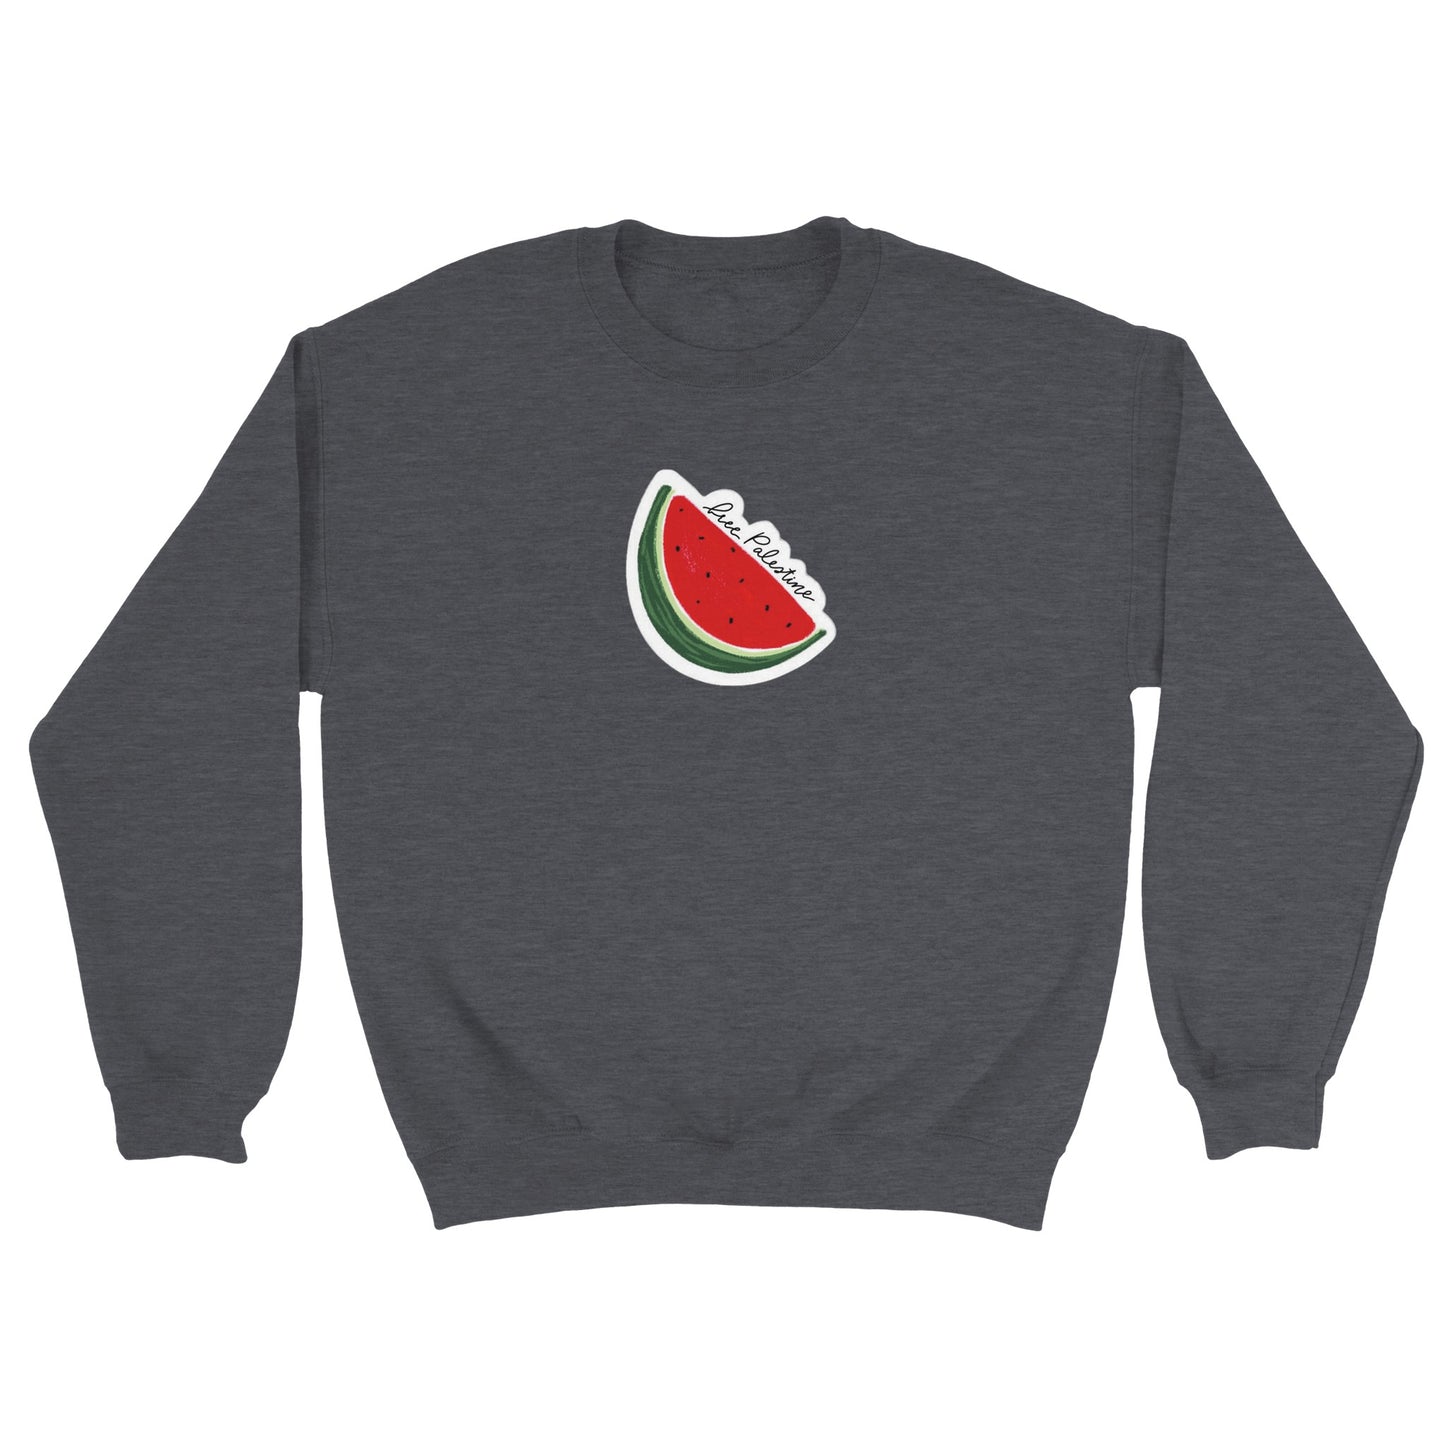 Watermelon Graphic - Classic Unisex Crewneck Sweatshirt